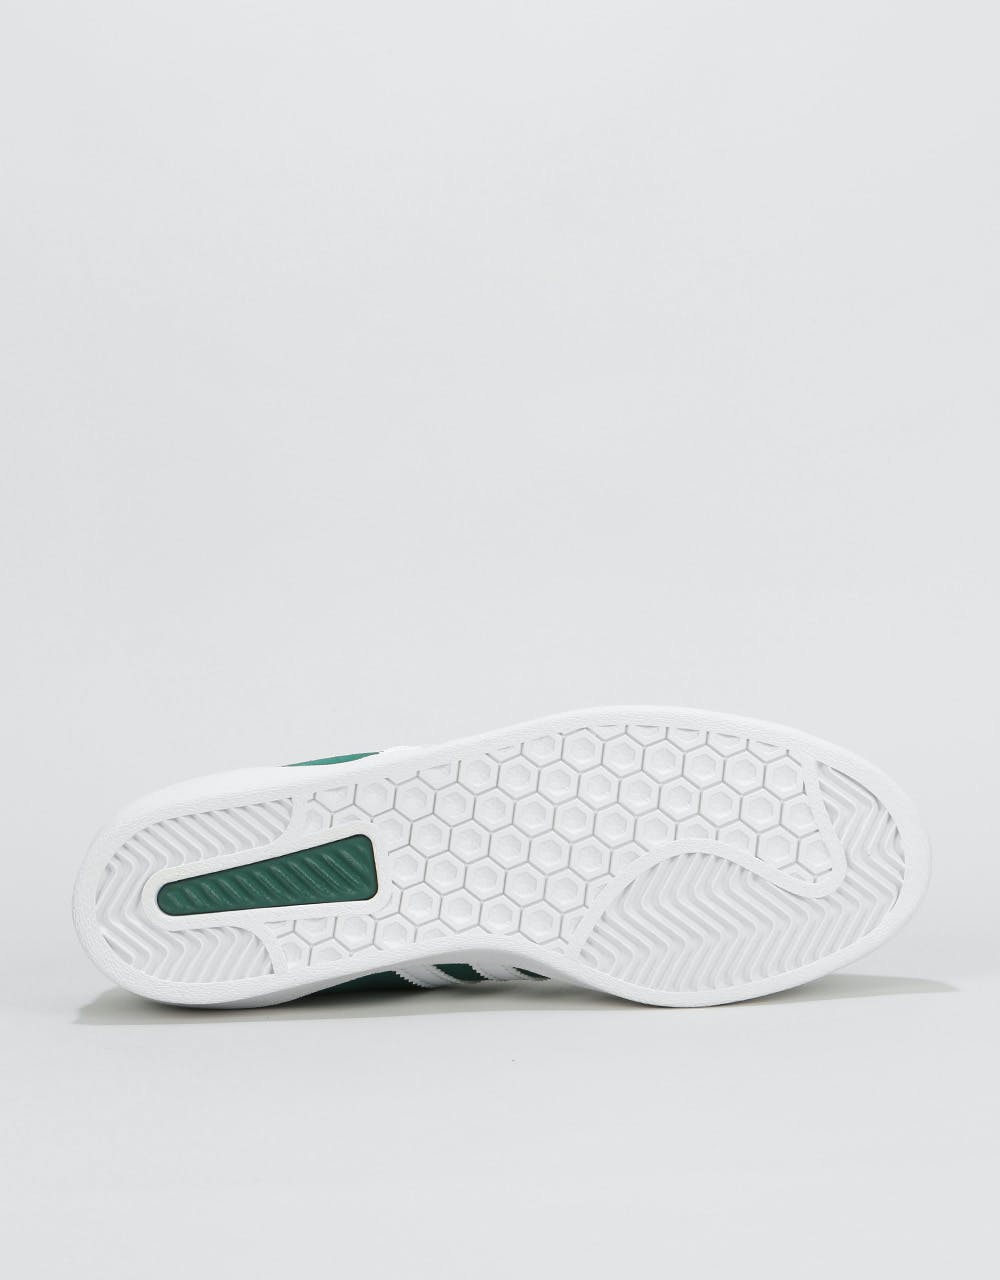 Adidas Campus ADV Skate Shoes - Collegiate Green/White/Gold Metallic